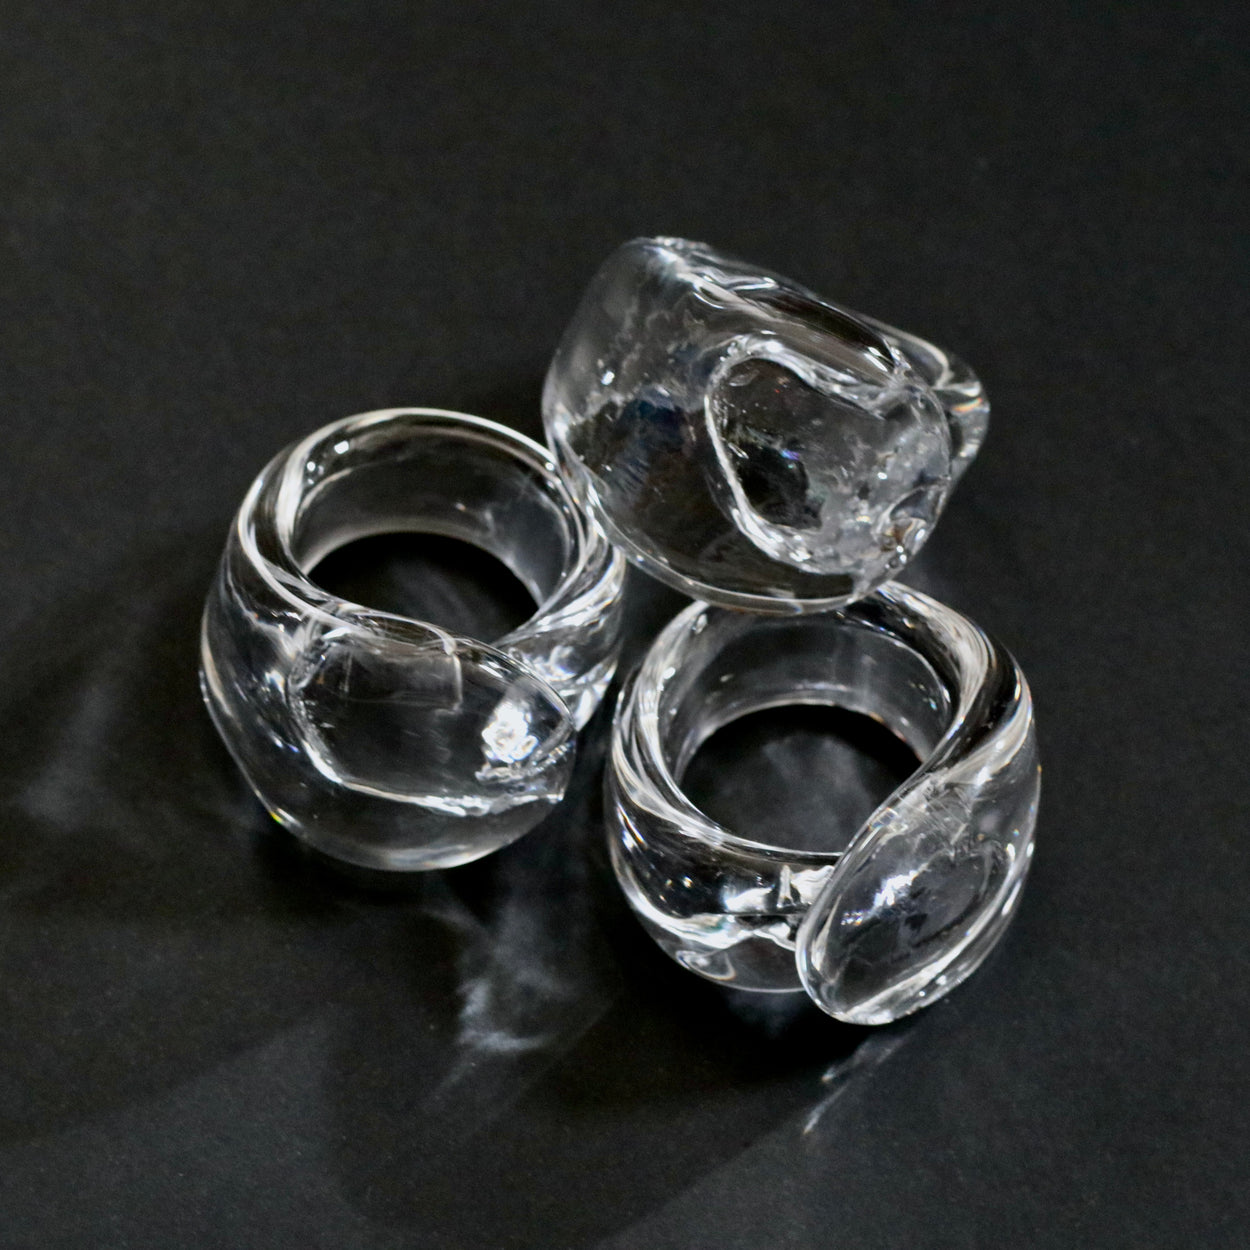 3 Vintage handmade glass napkin rings against a black background.